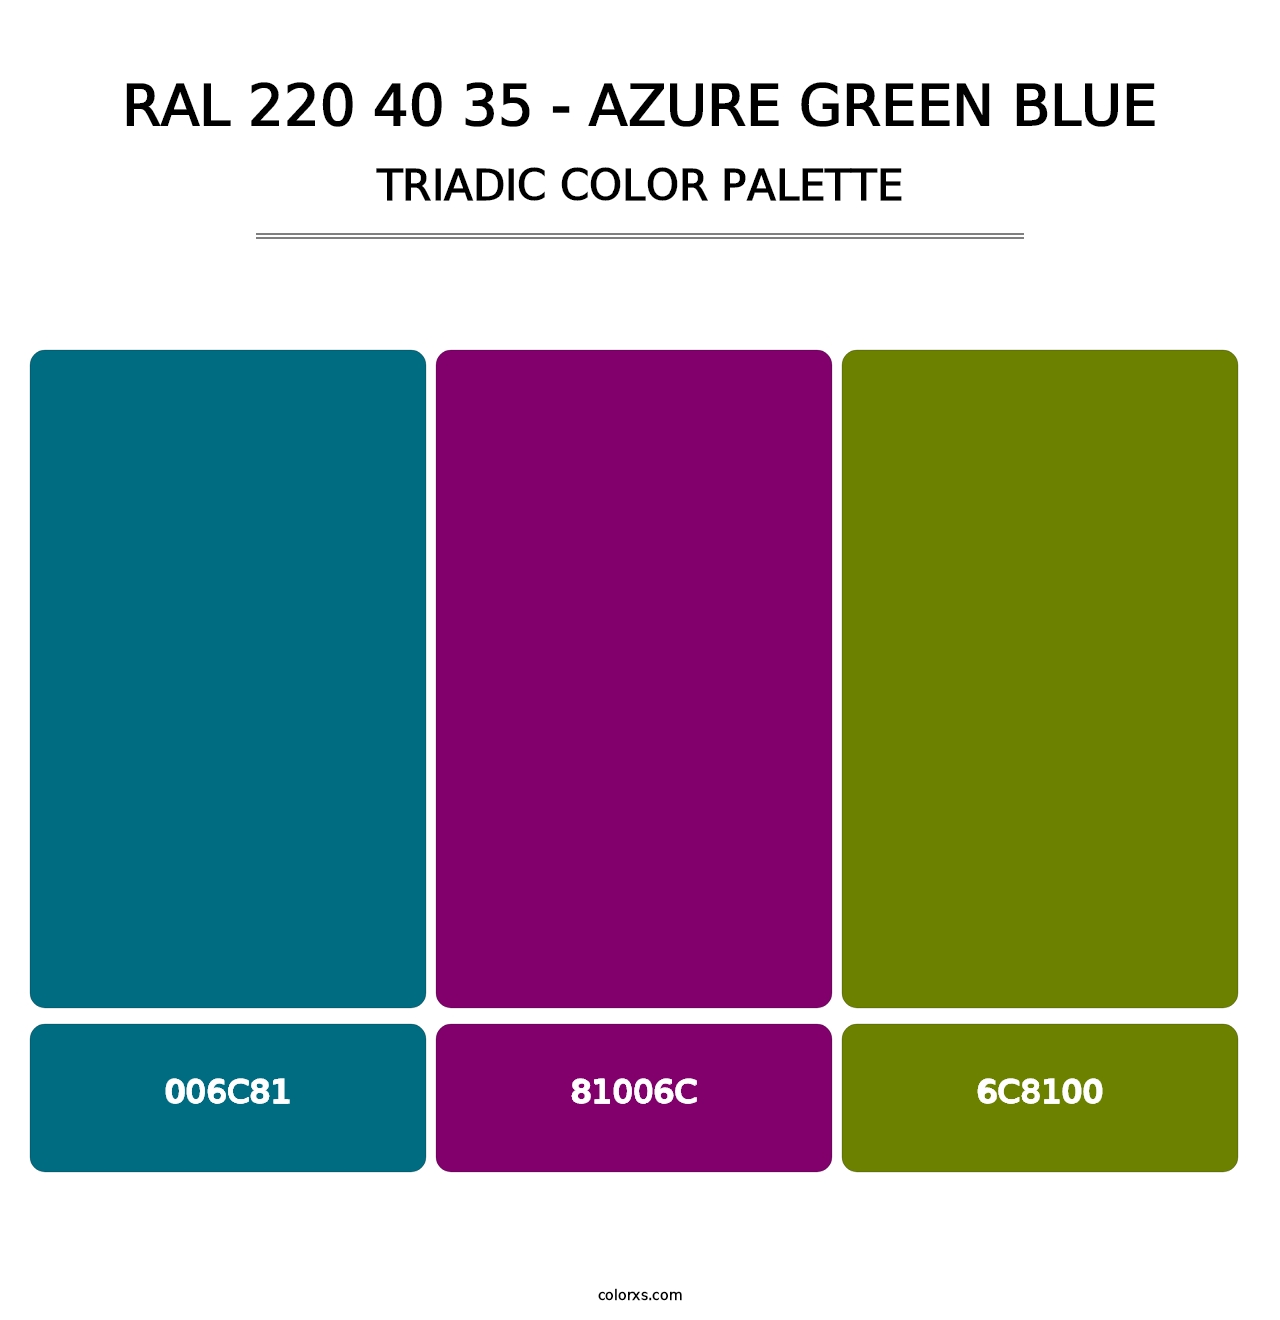 RAL 220 40 35 - Azure Green Blue - Triadic Color Palette